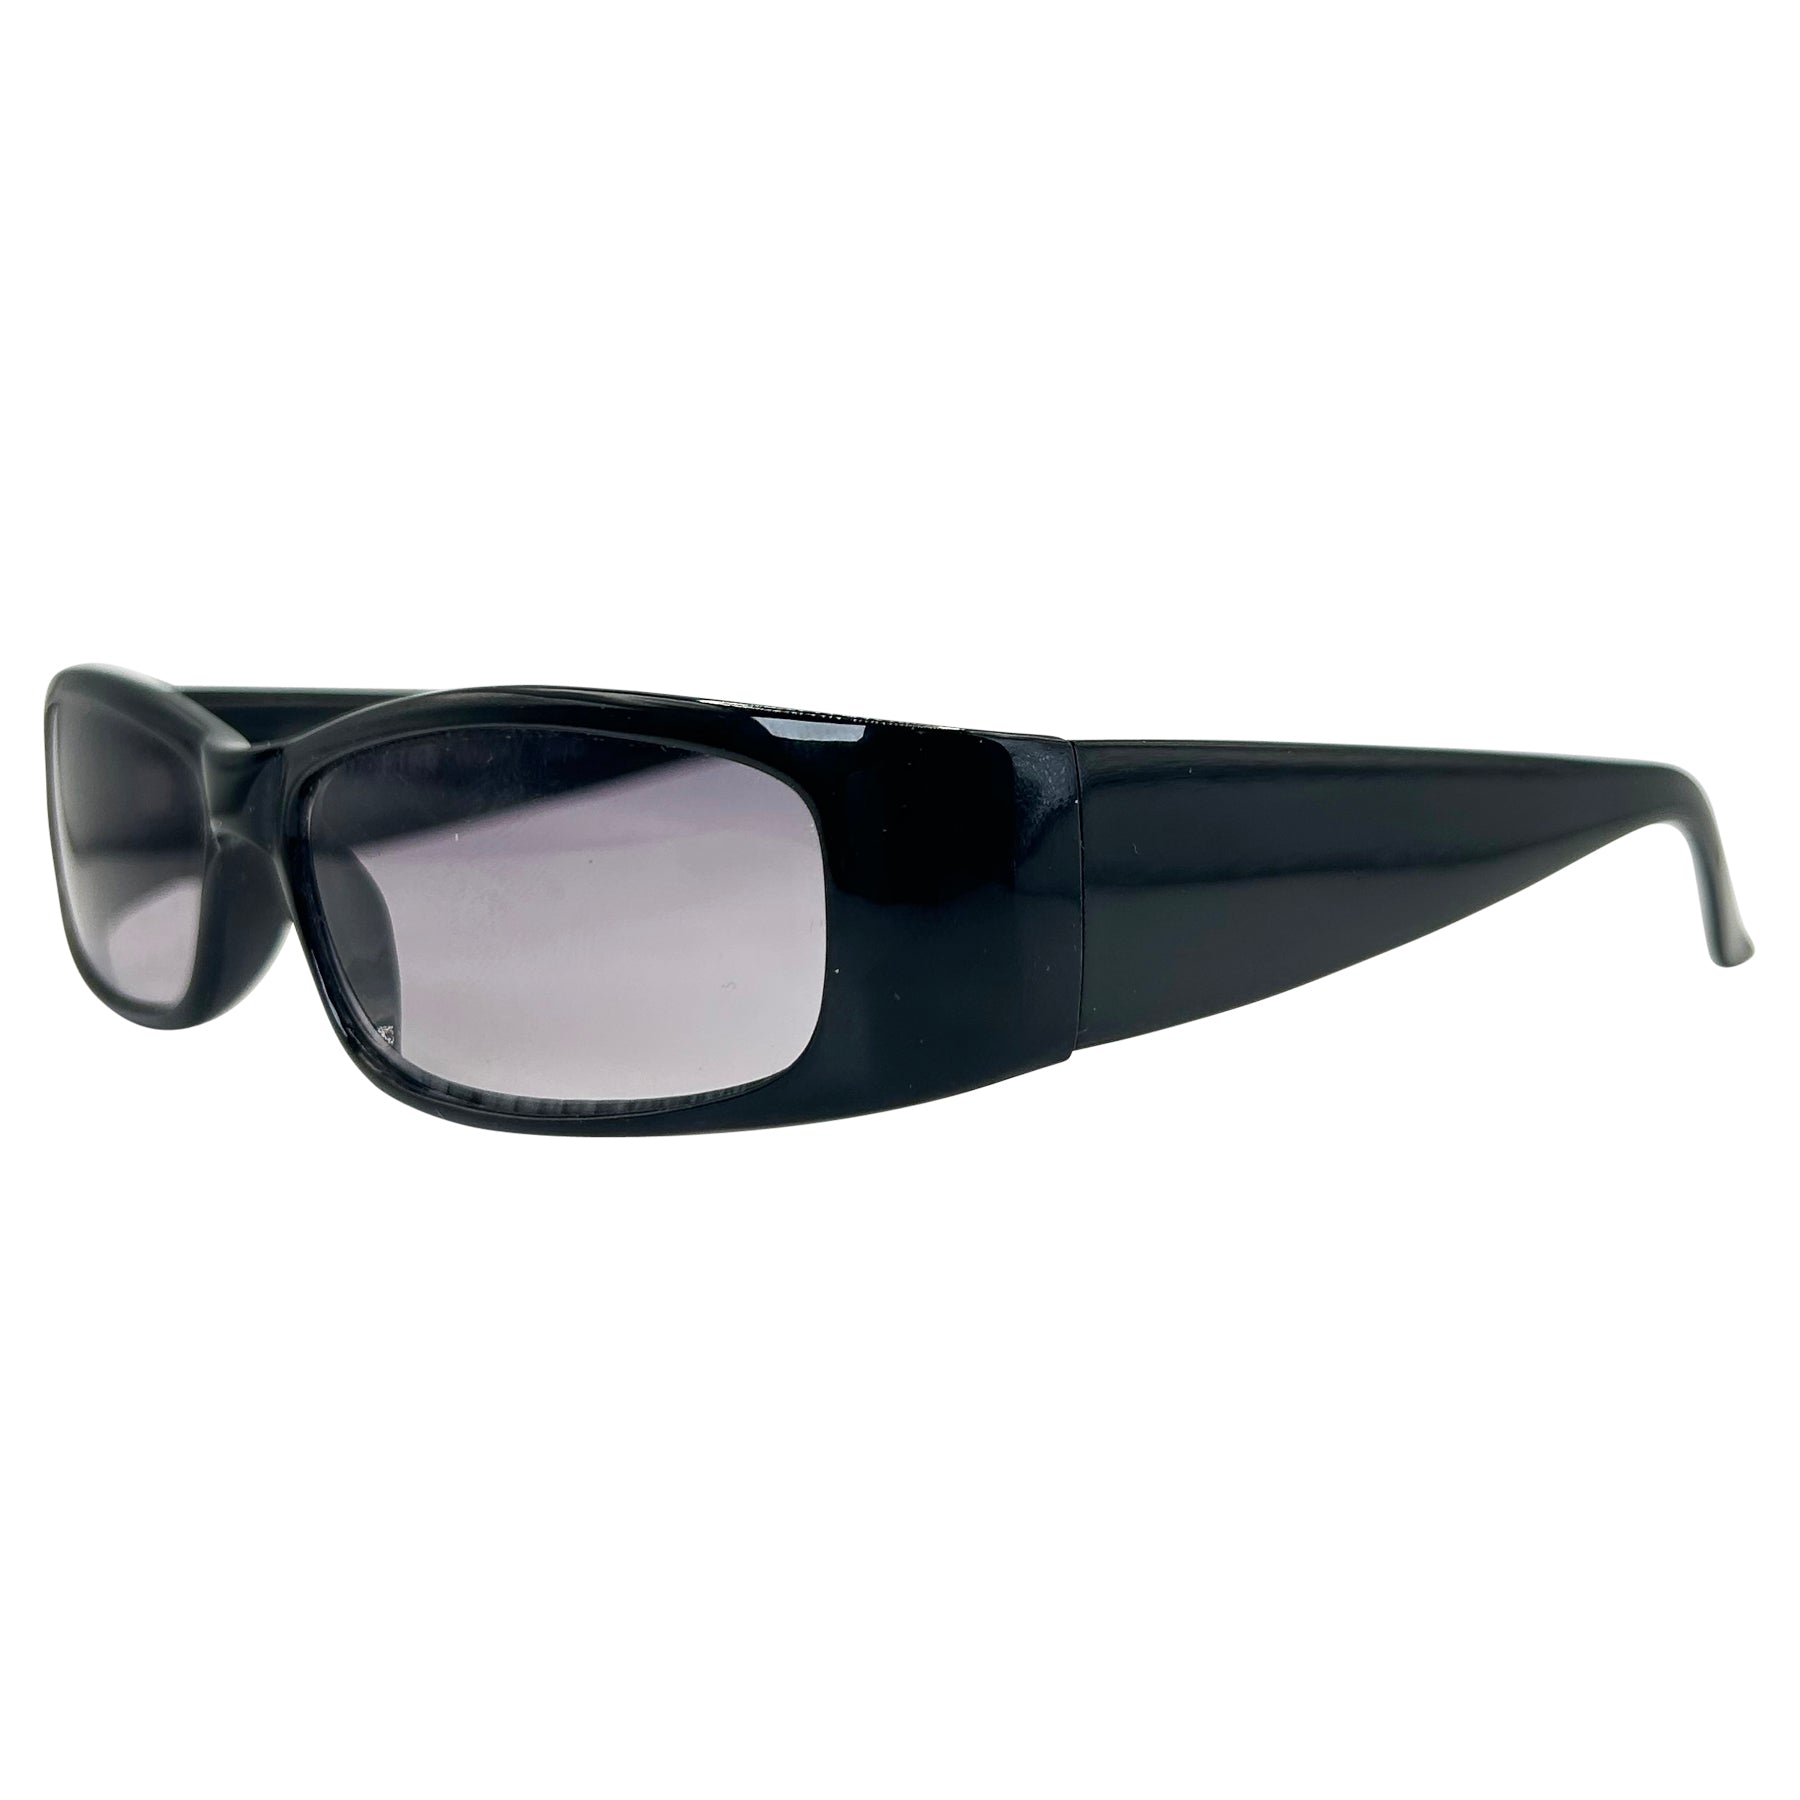 PINDROP Square 90s Sunglasses